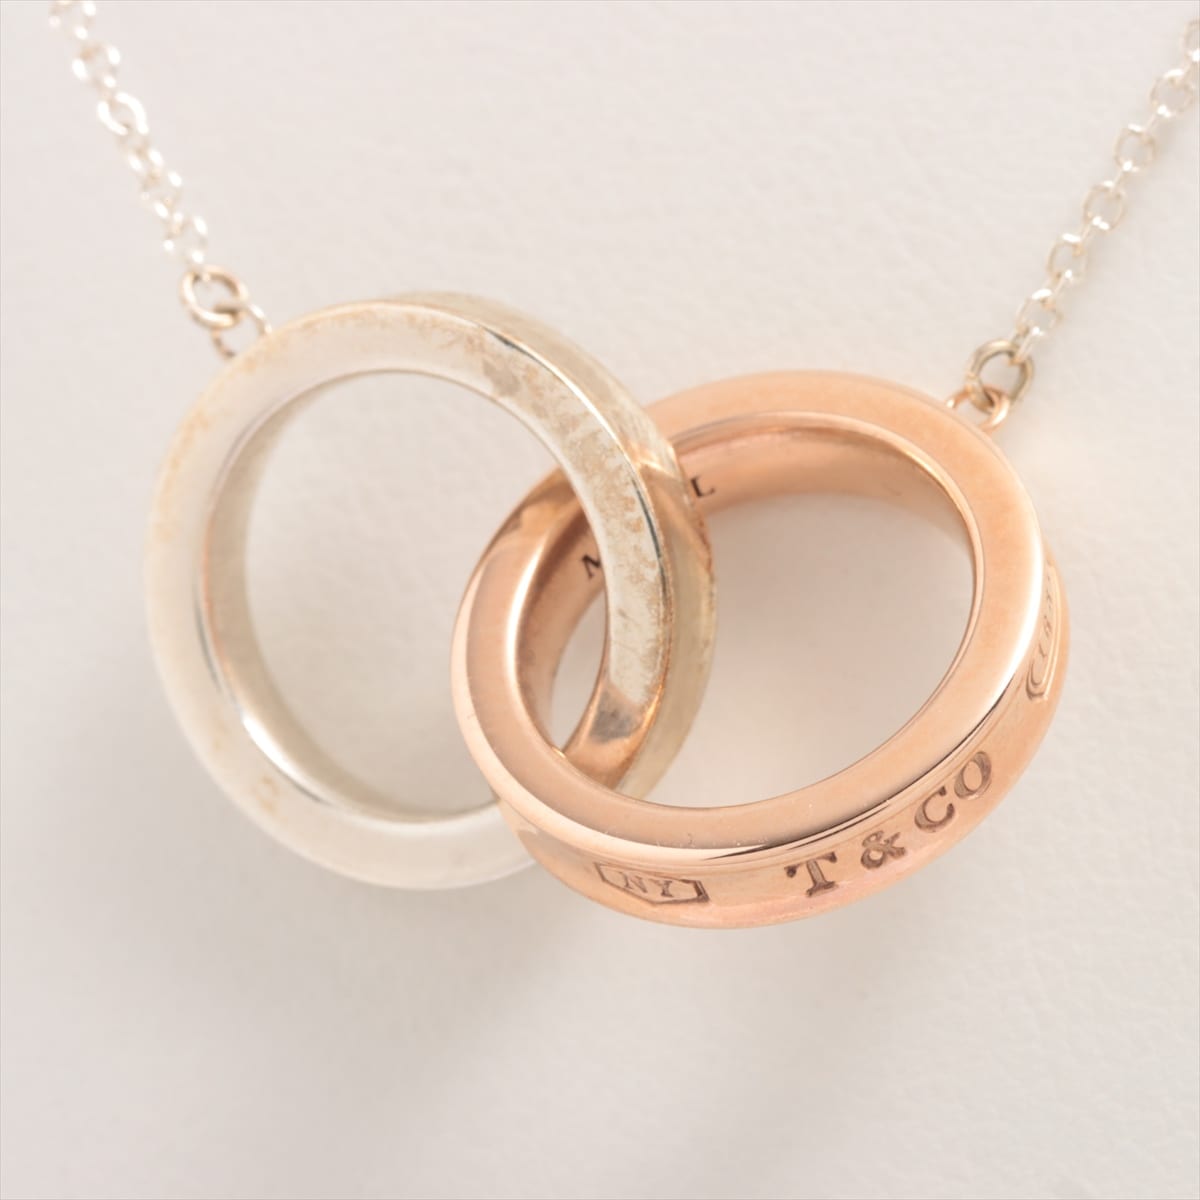 Tiffany 1837 Interlocking Circle Necklace 925×750 4.9g Gold × Silver